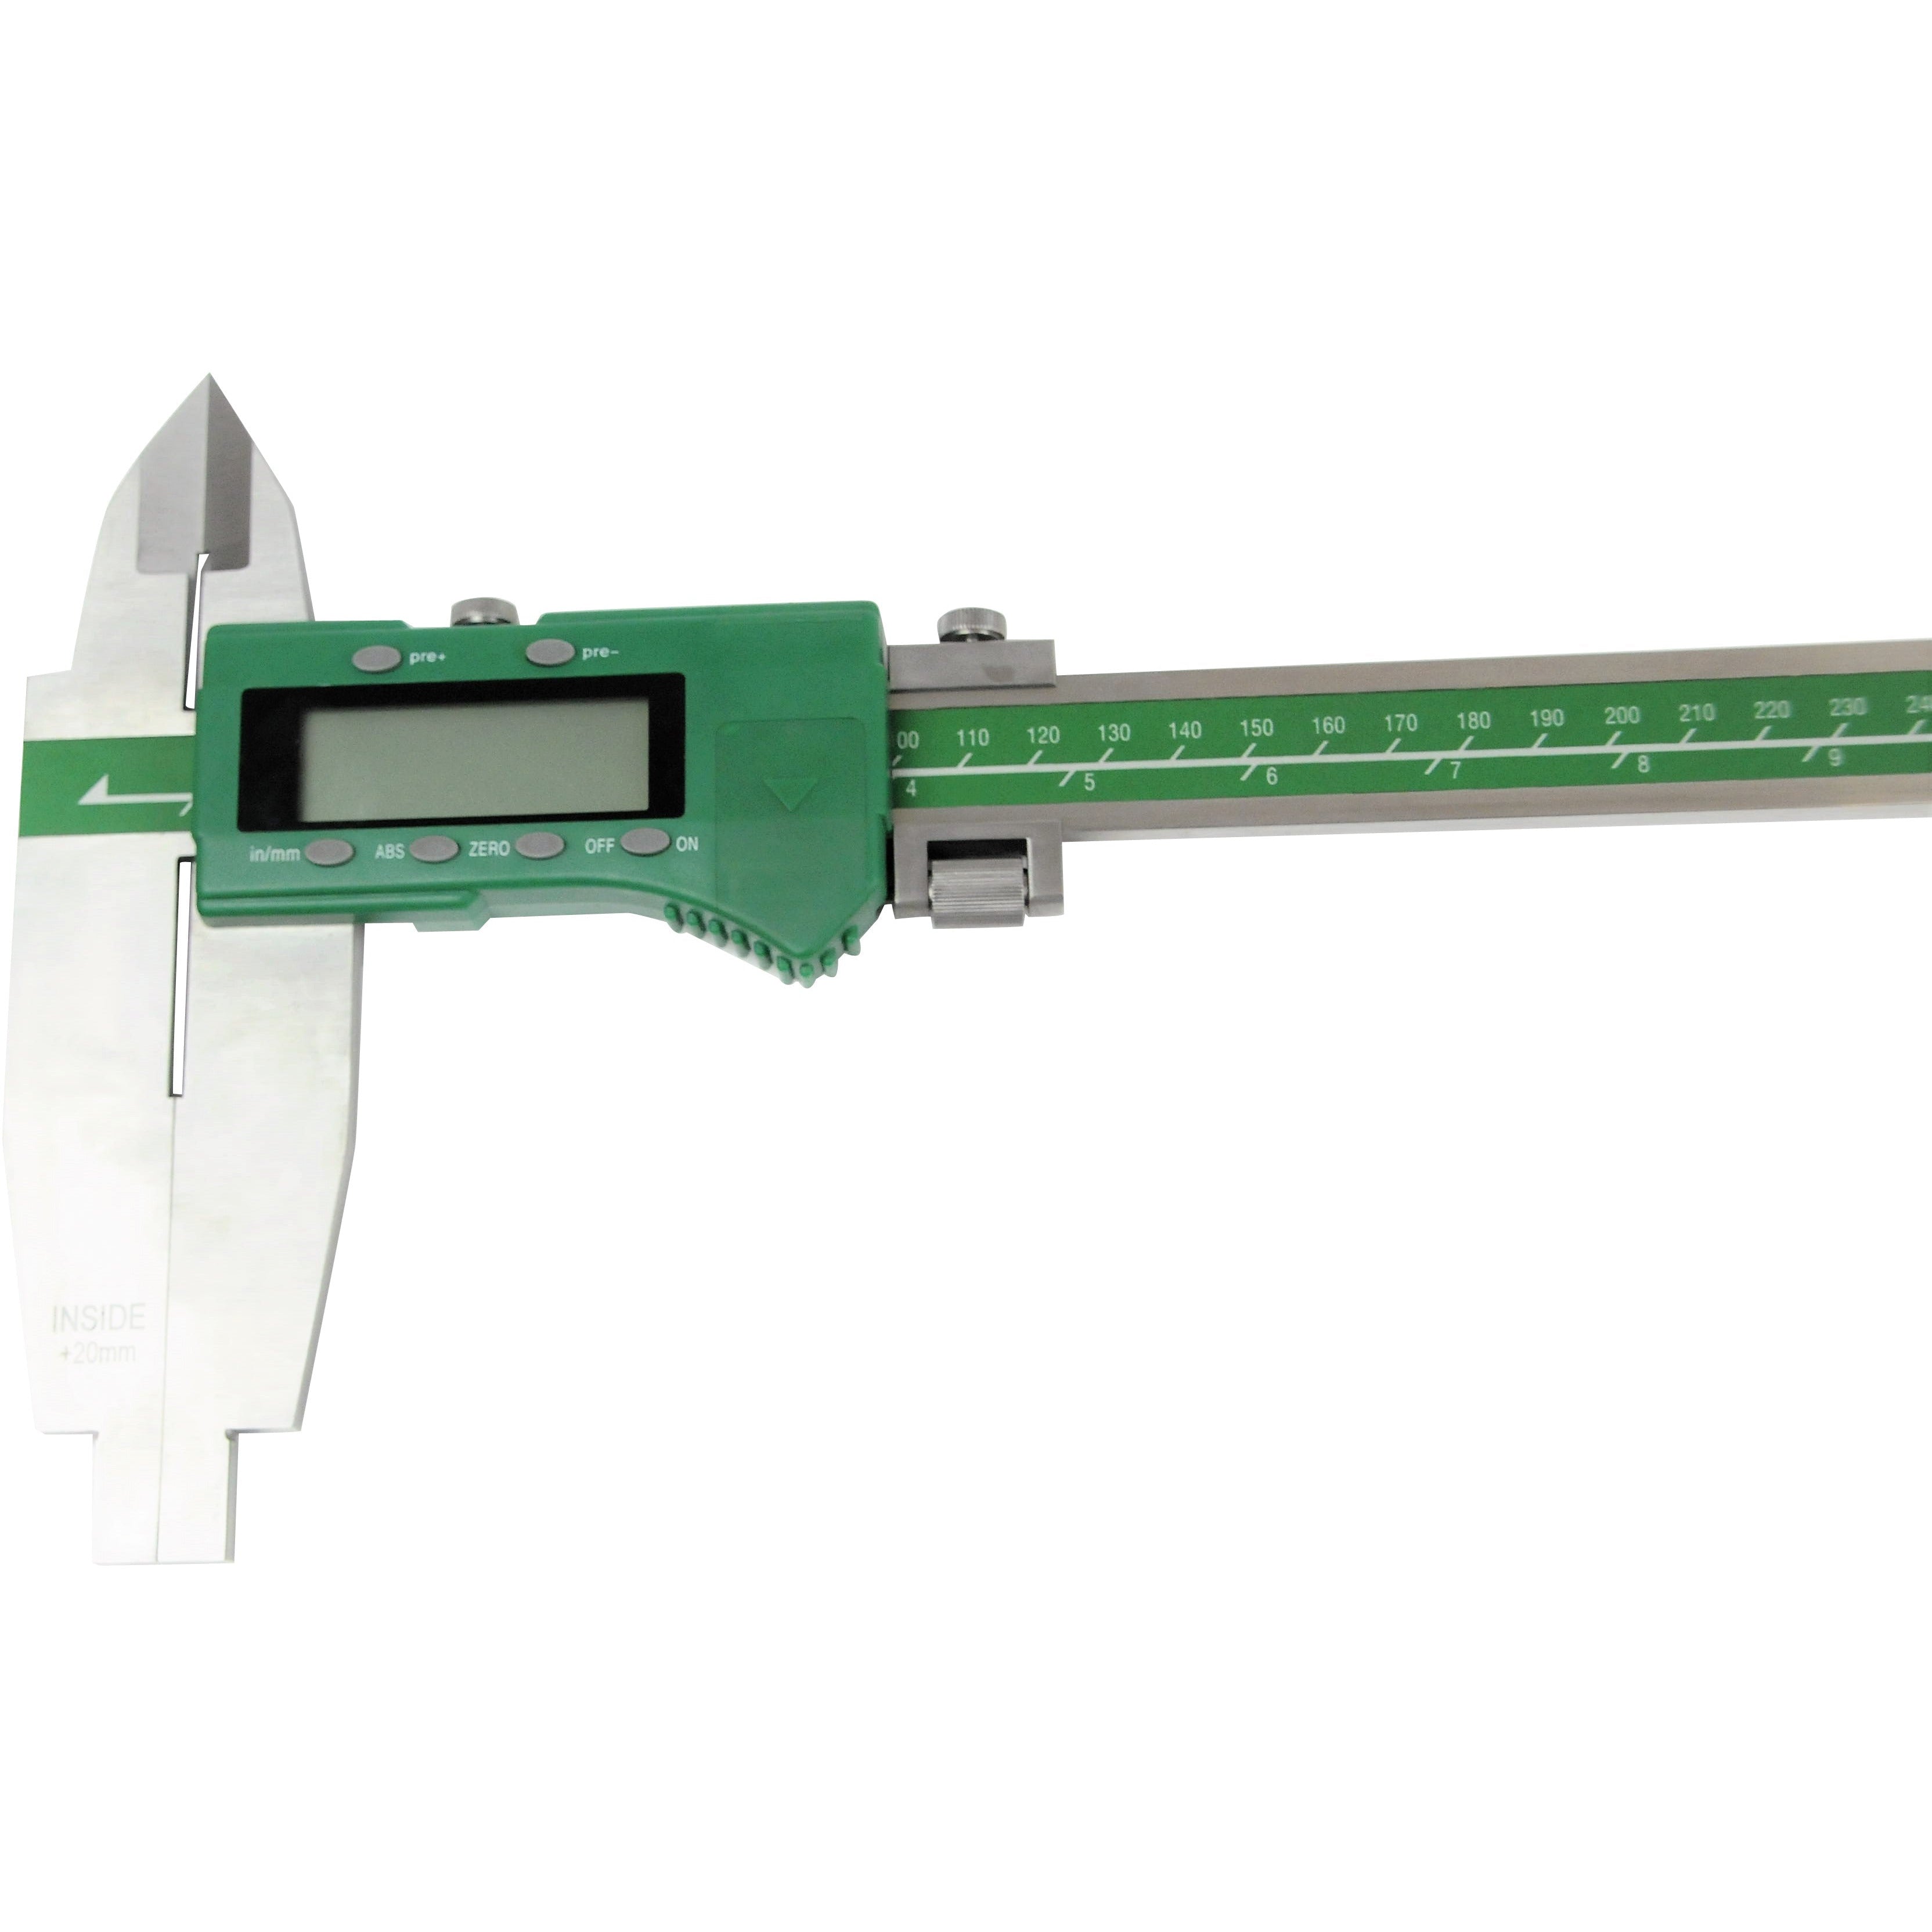 Insize Digital Caliper 0-600mm / 0-12" Range Series 1117-601